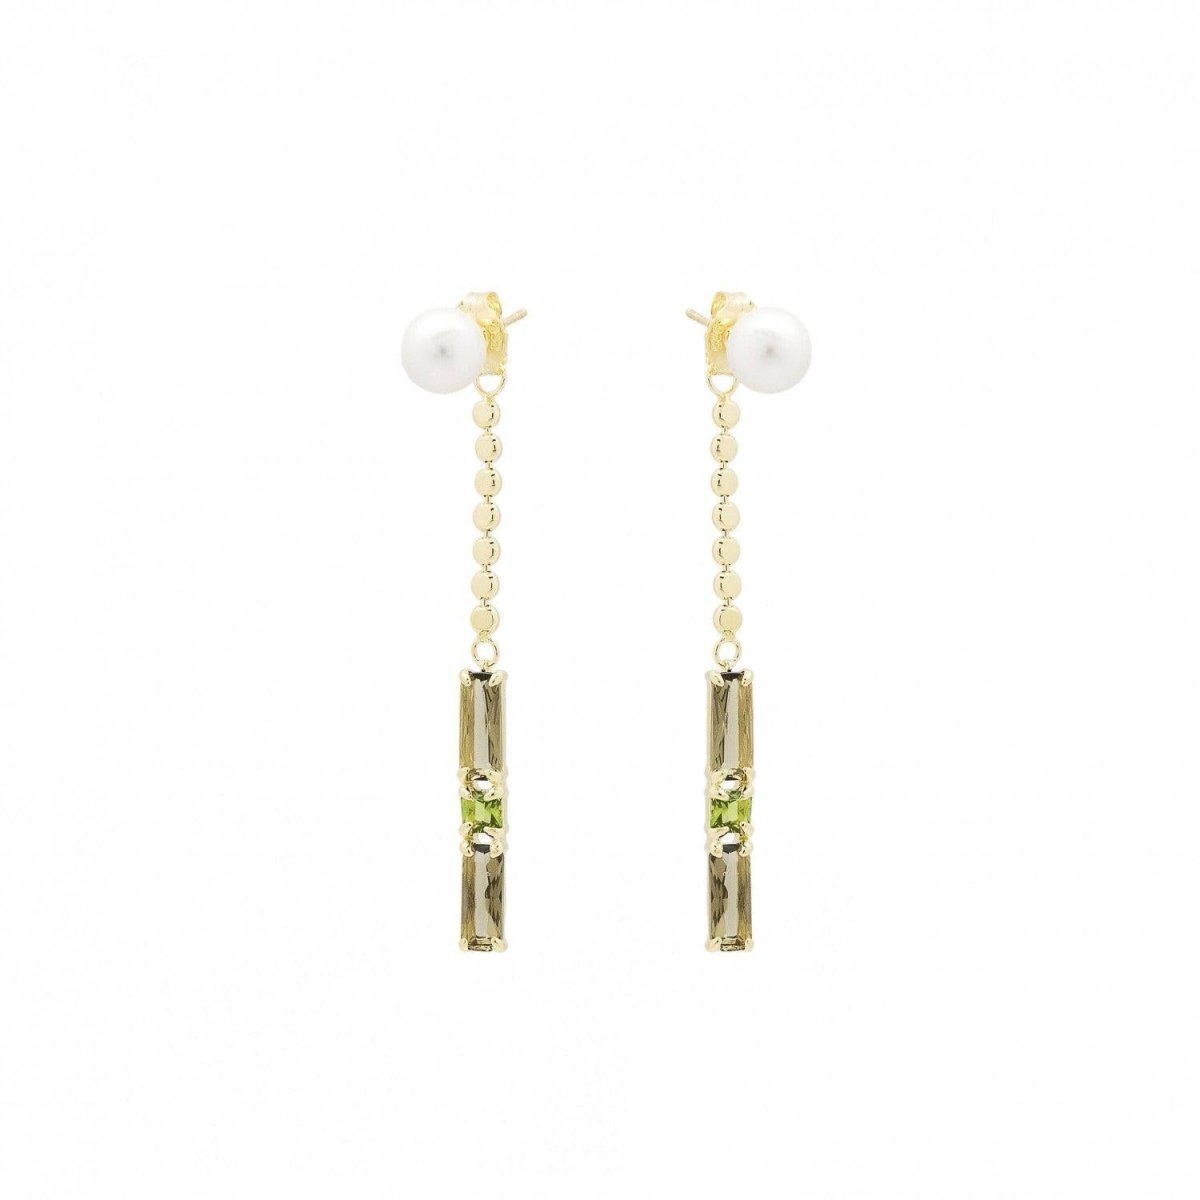 Earrings - Long earrings with pearl and pendant motif design